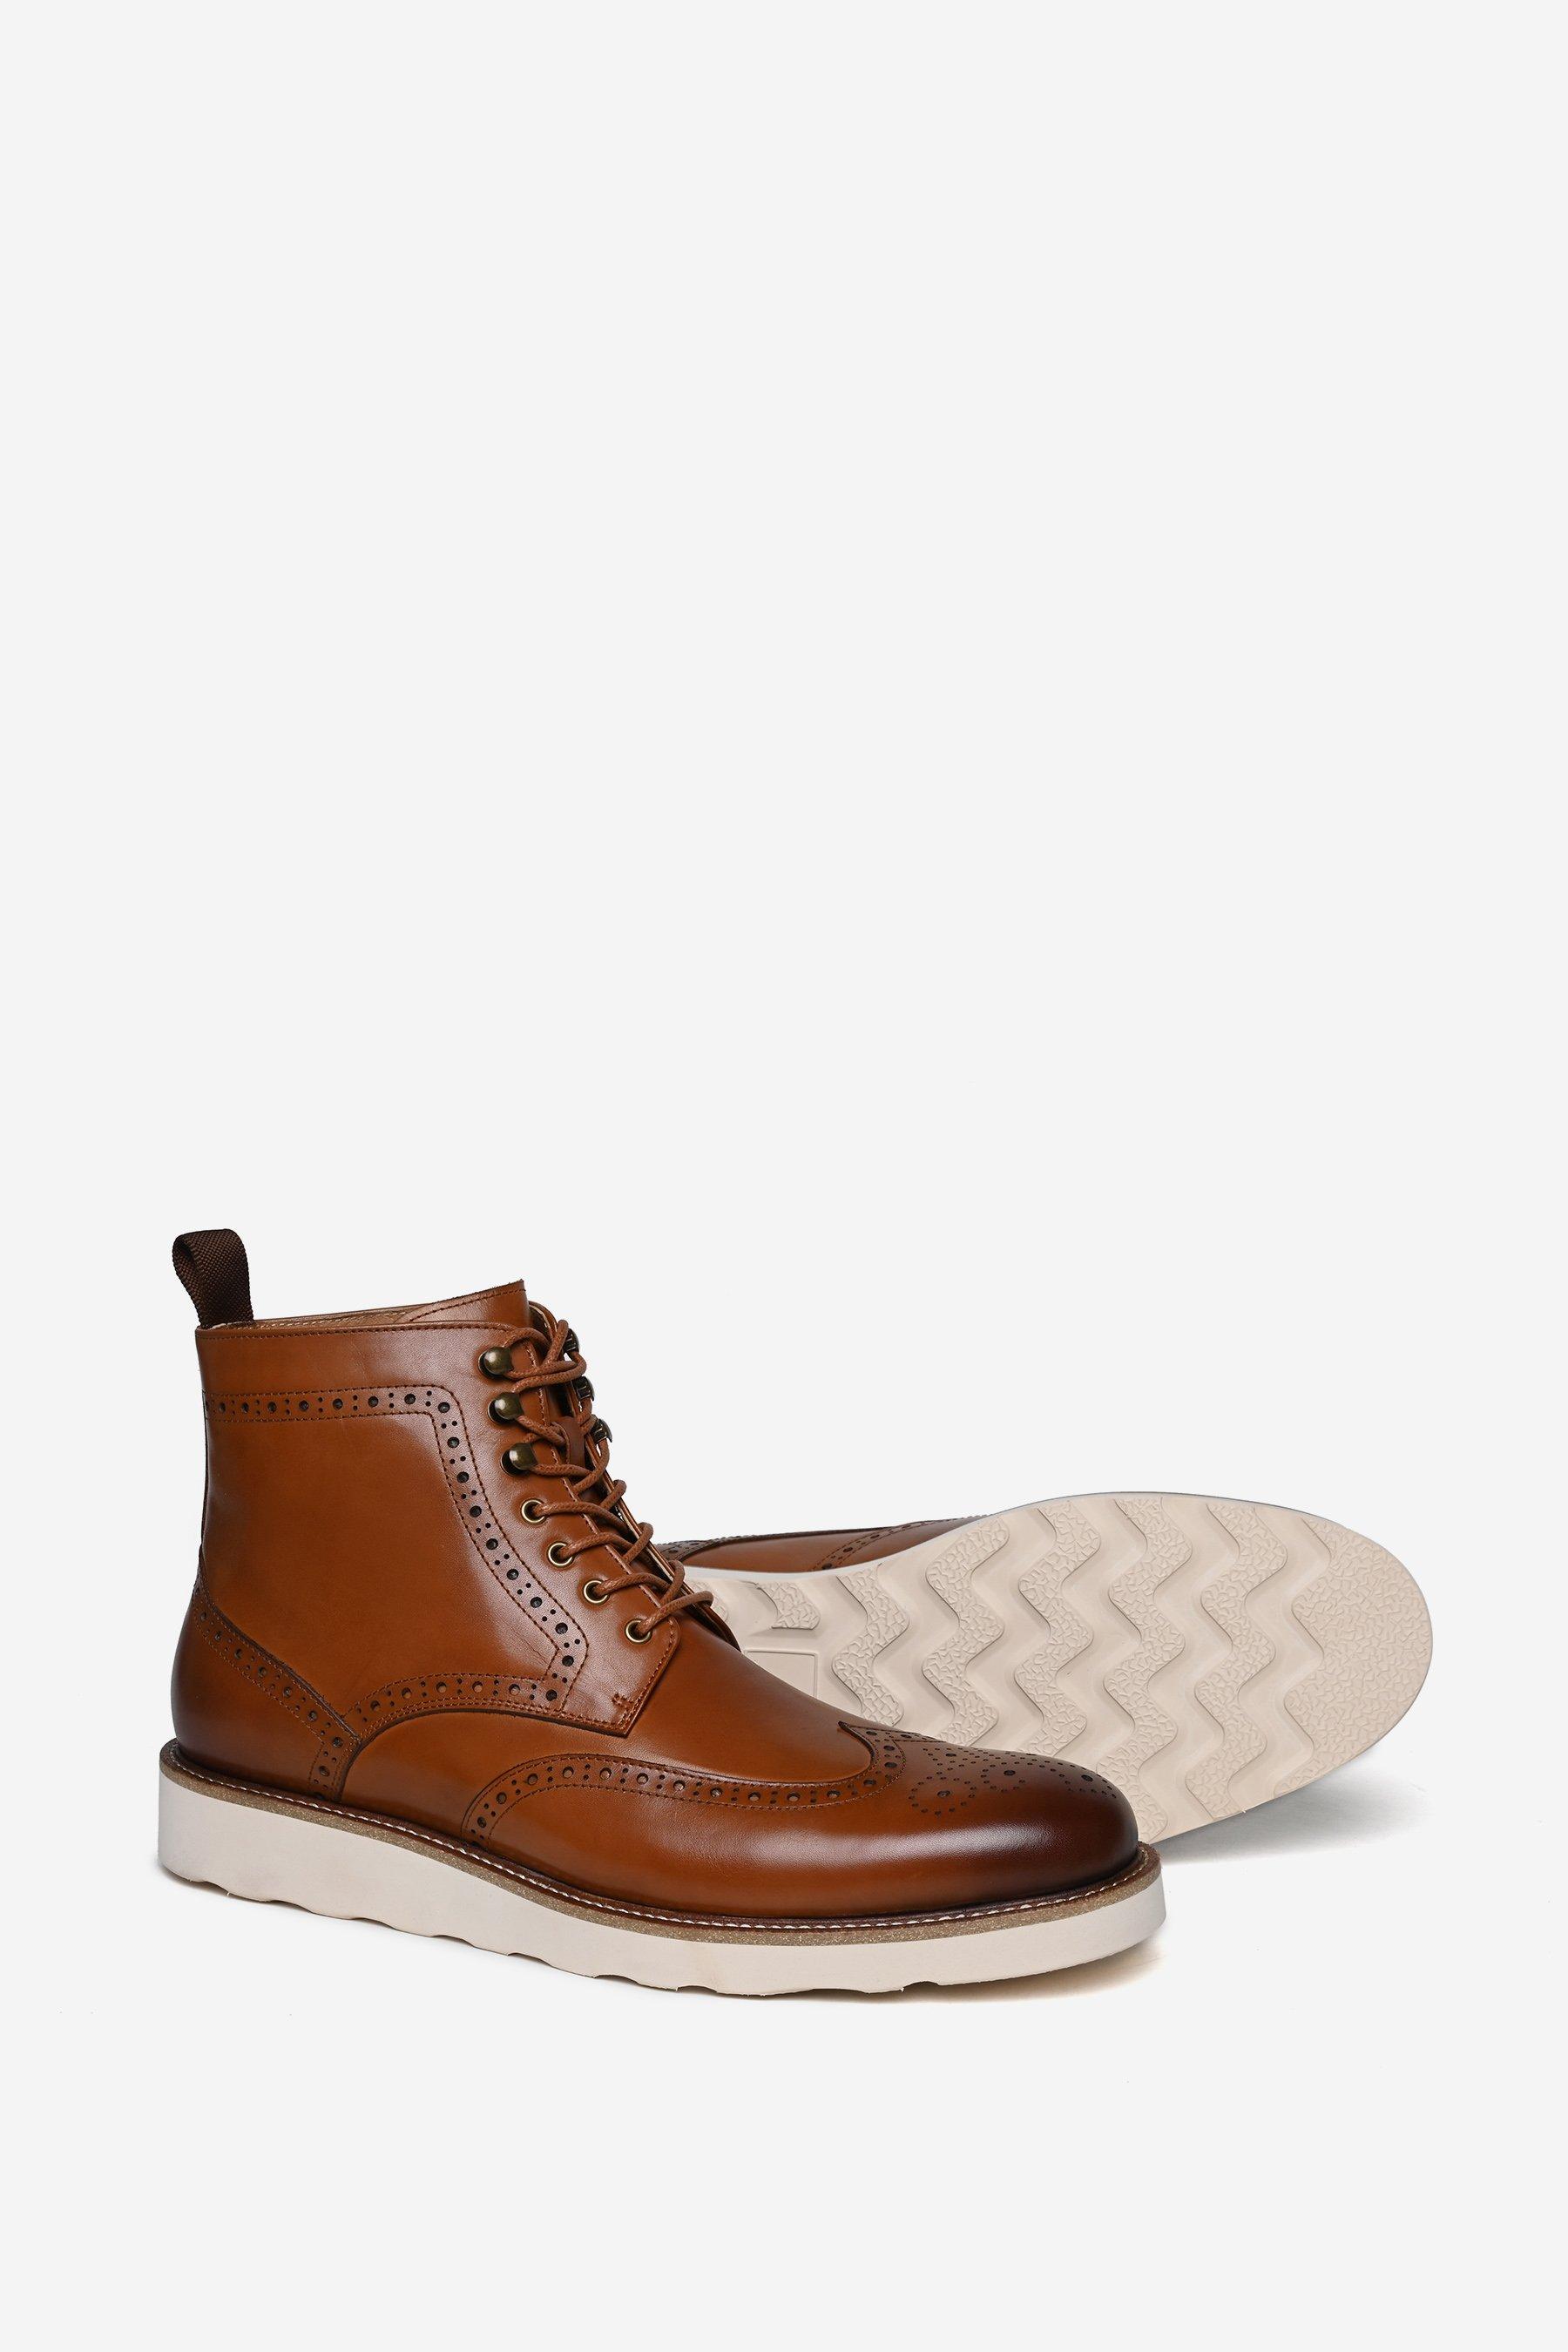 Кожаные ботинки броги премиум-класса 'Haggerston' Alexander Pace, коричневый